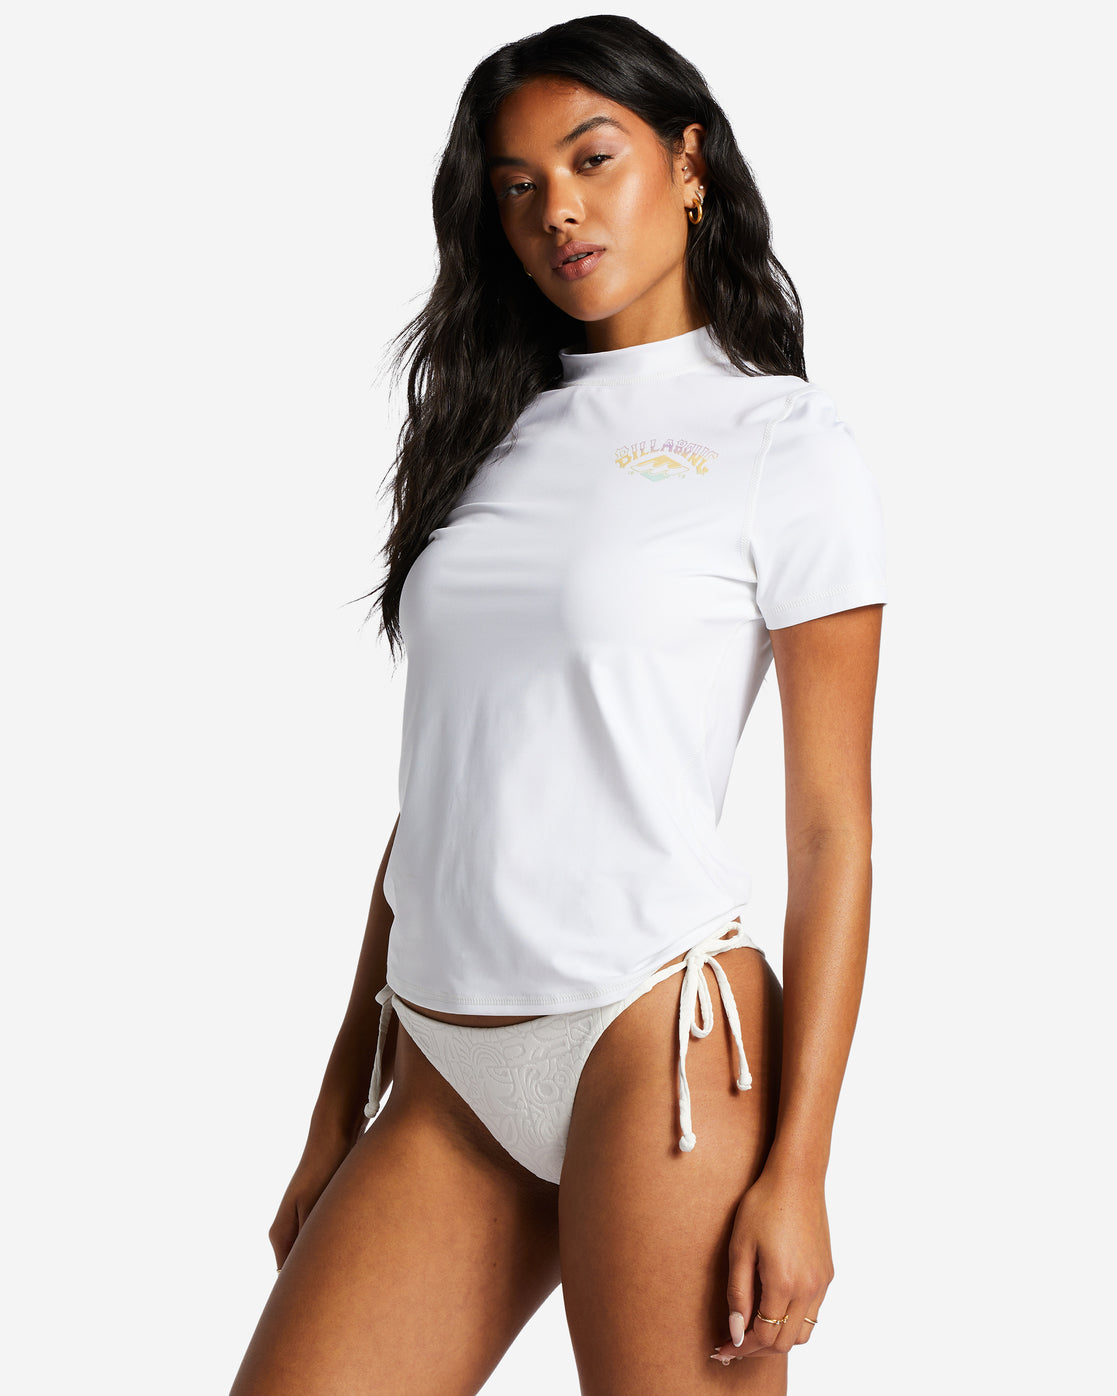 Core Loose Fit Short Sleeve Rashguardbillabong womens swim shirt